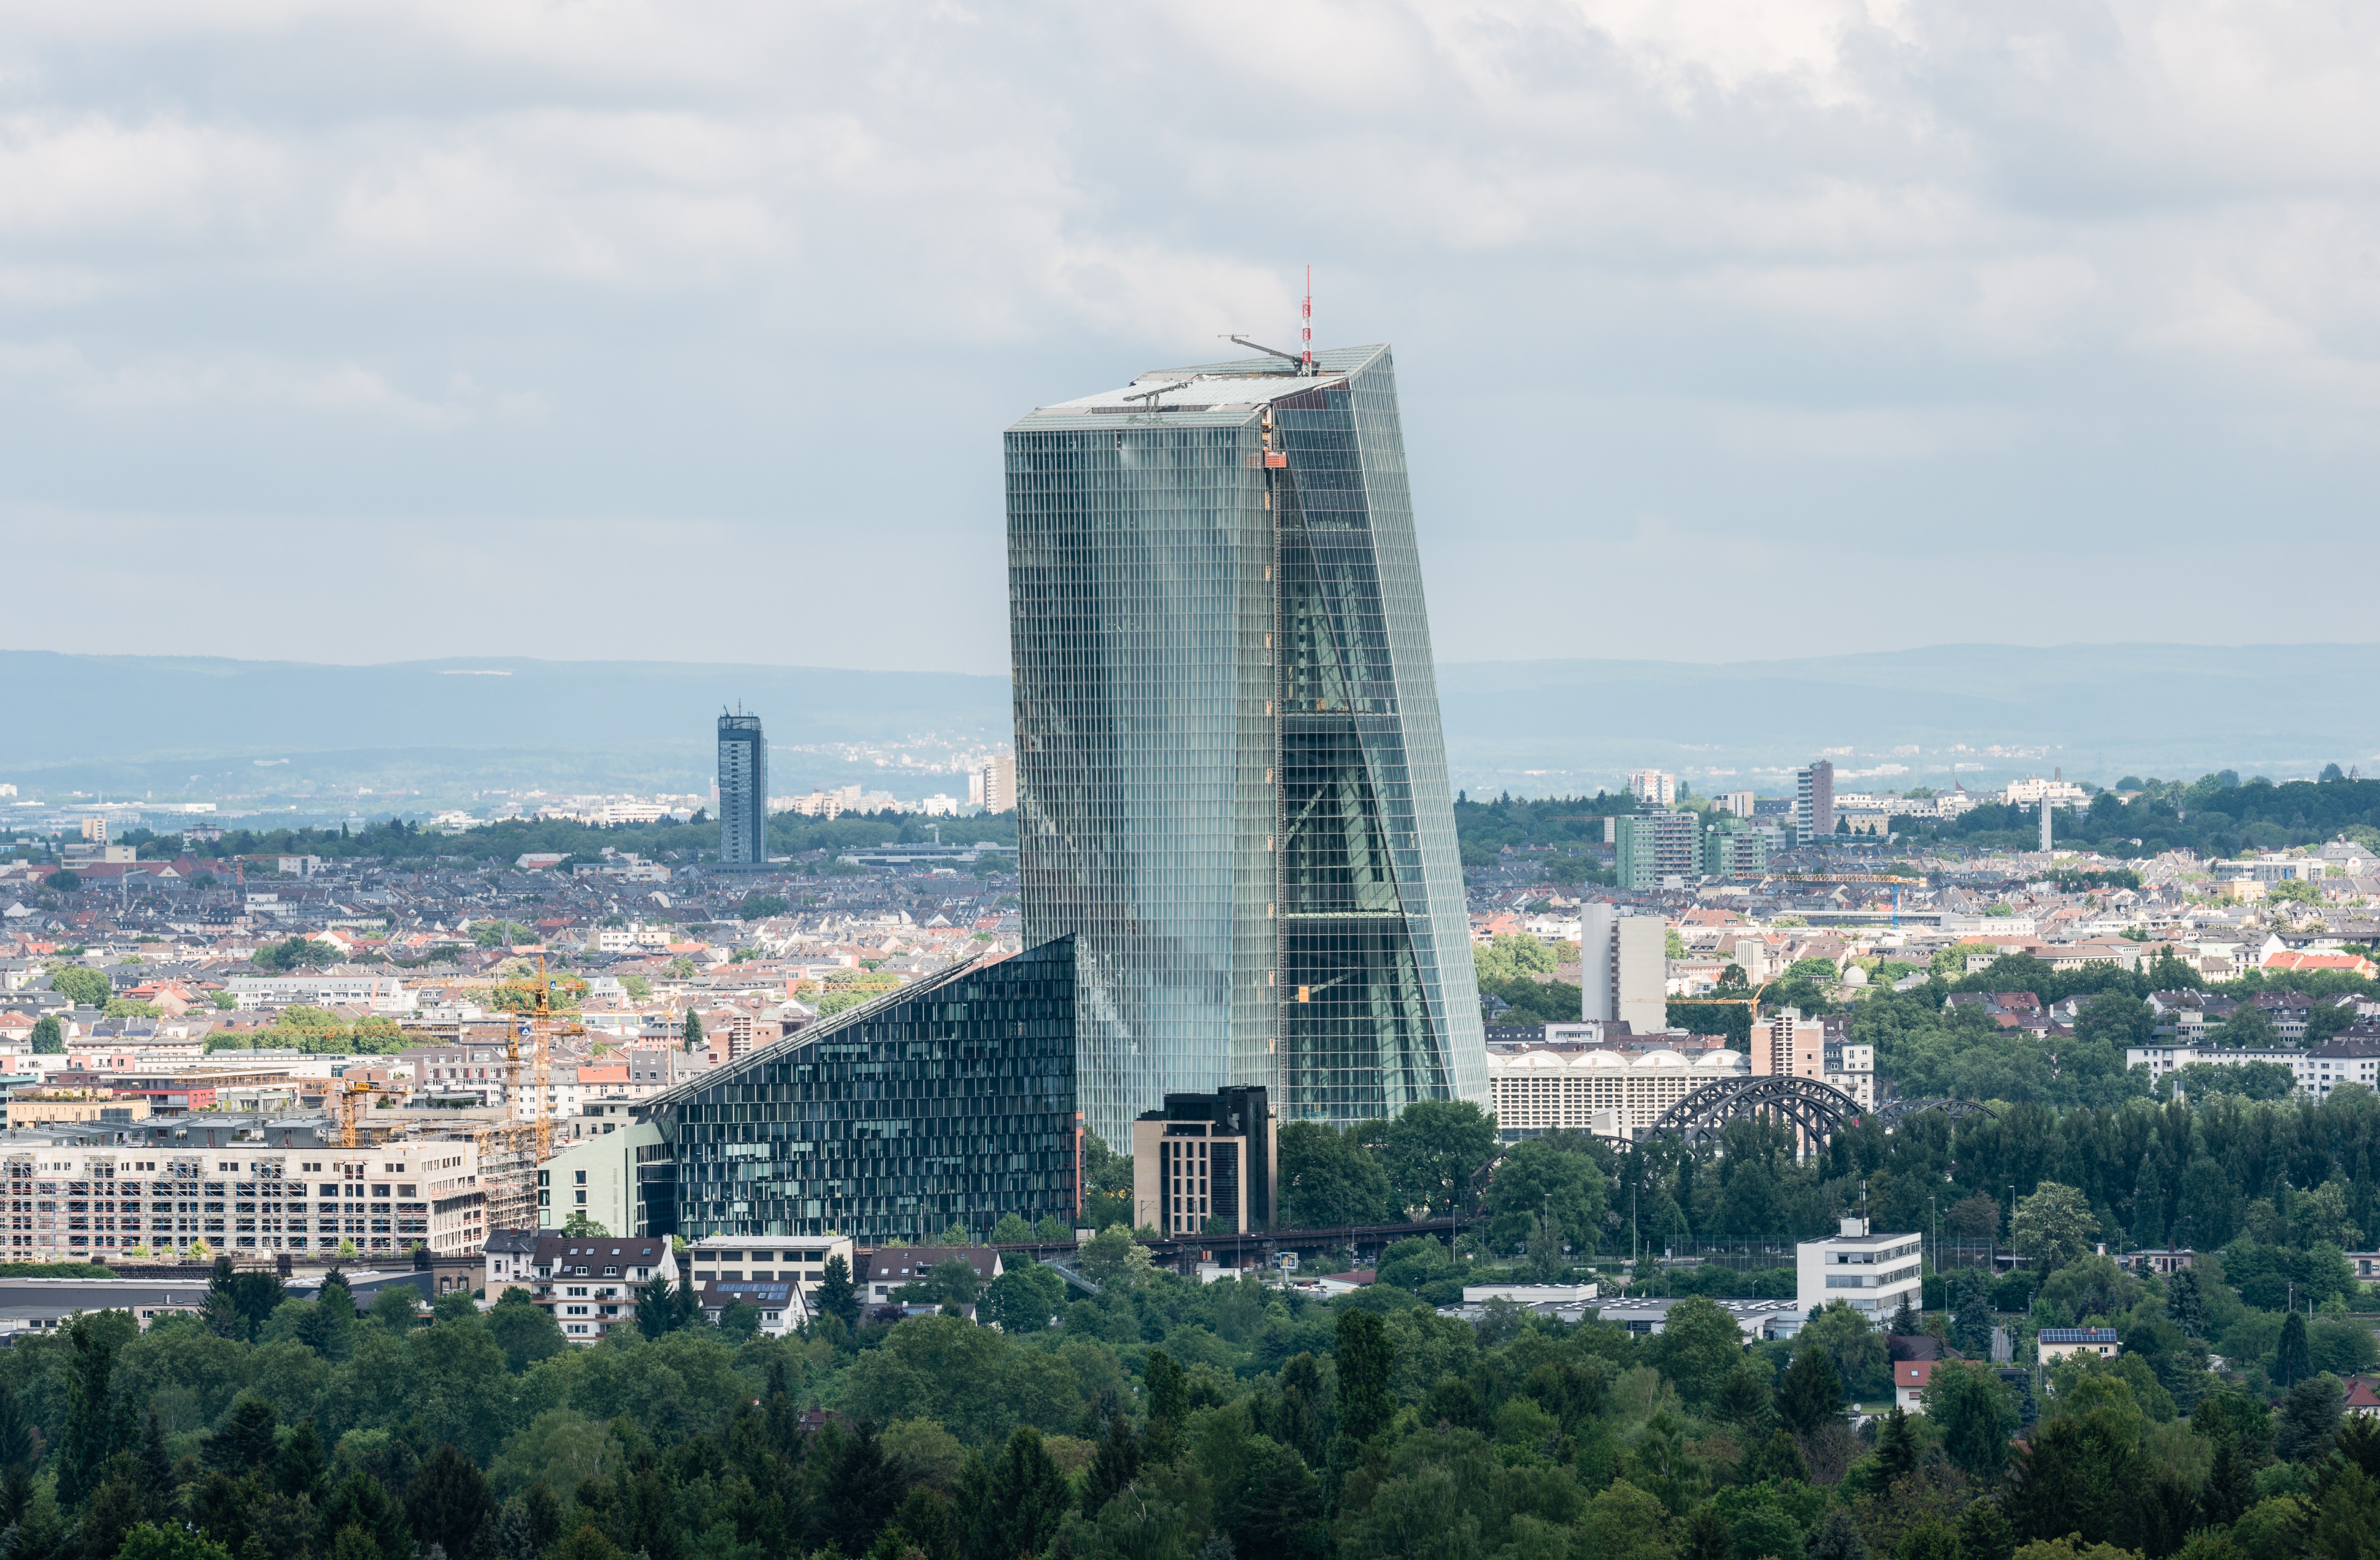 European Central Bank - building under construction - Frankfurt - Germany - 15